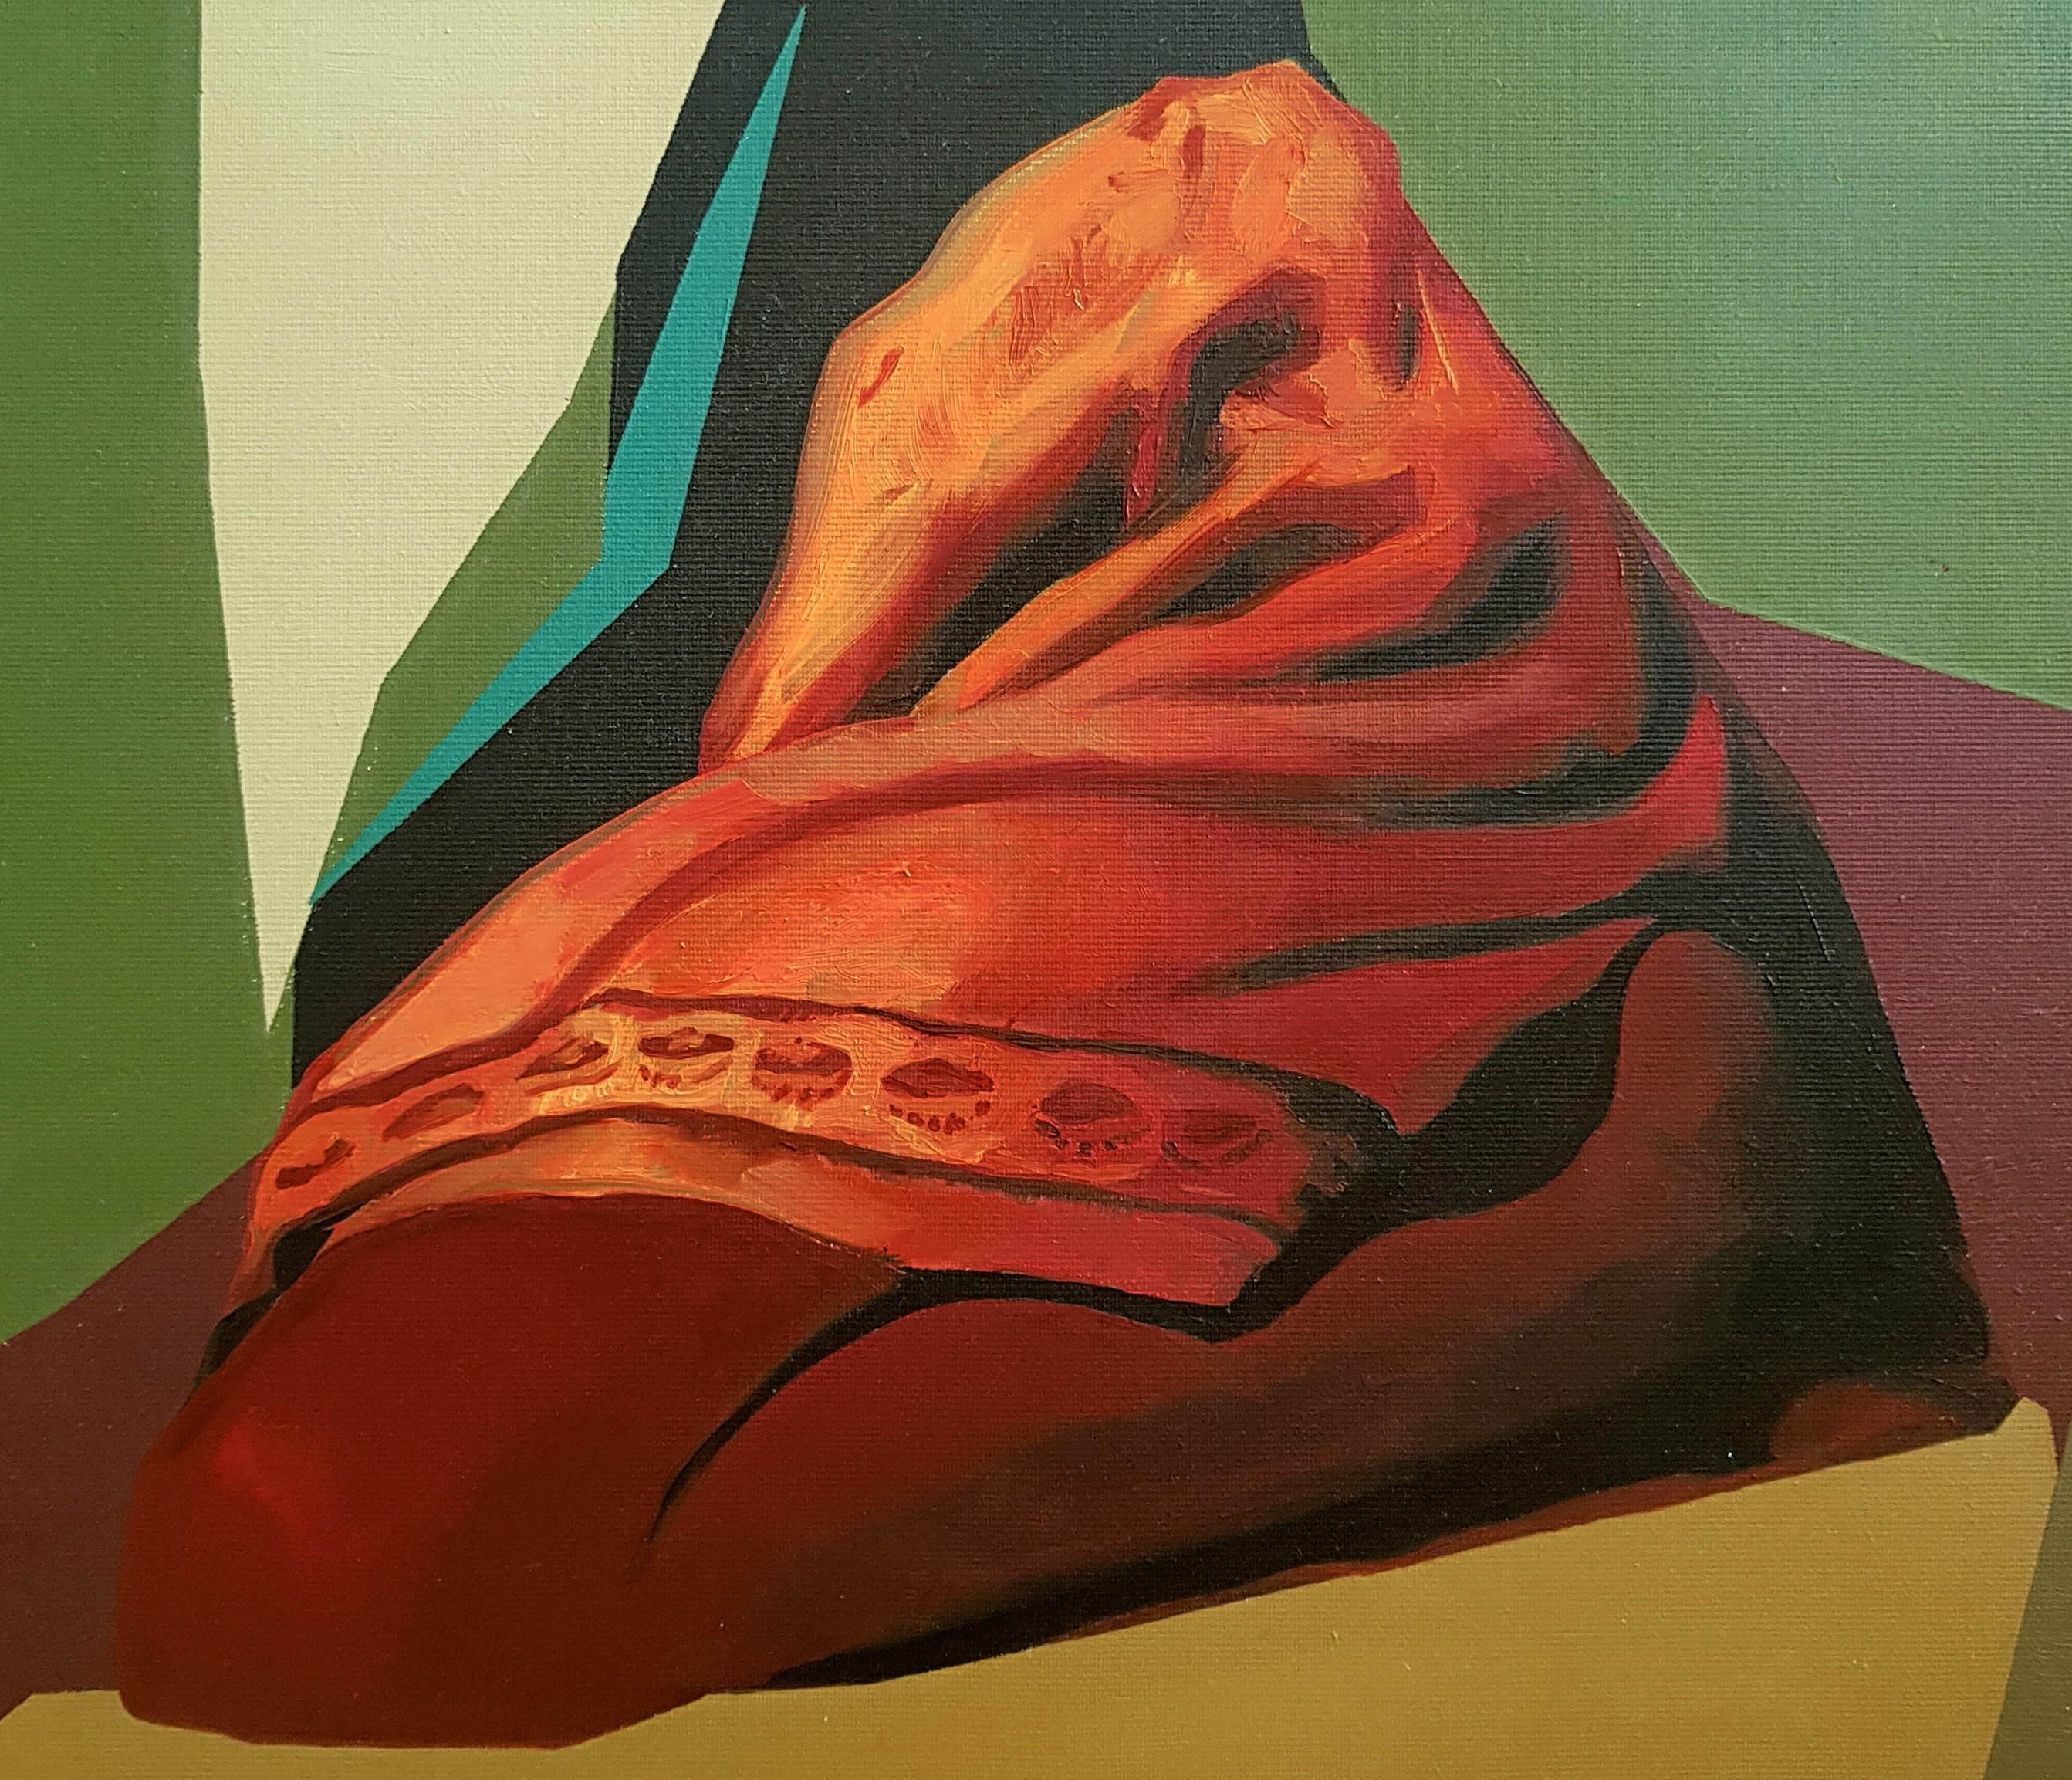 Le feu givr - 21e sicle, peinture, orange, vert, contemporain - Painting de Radu Rodideal